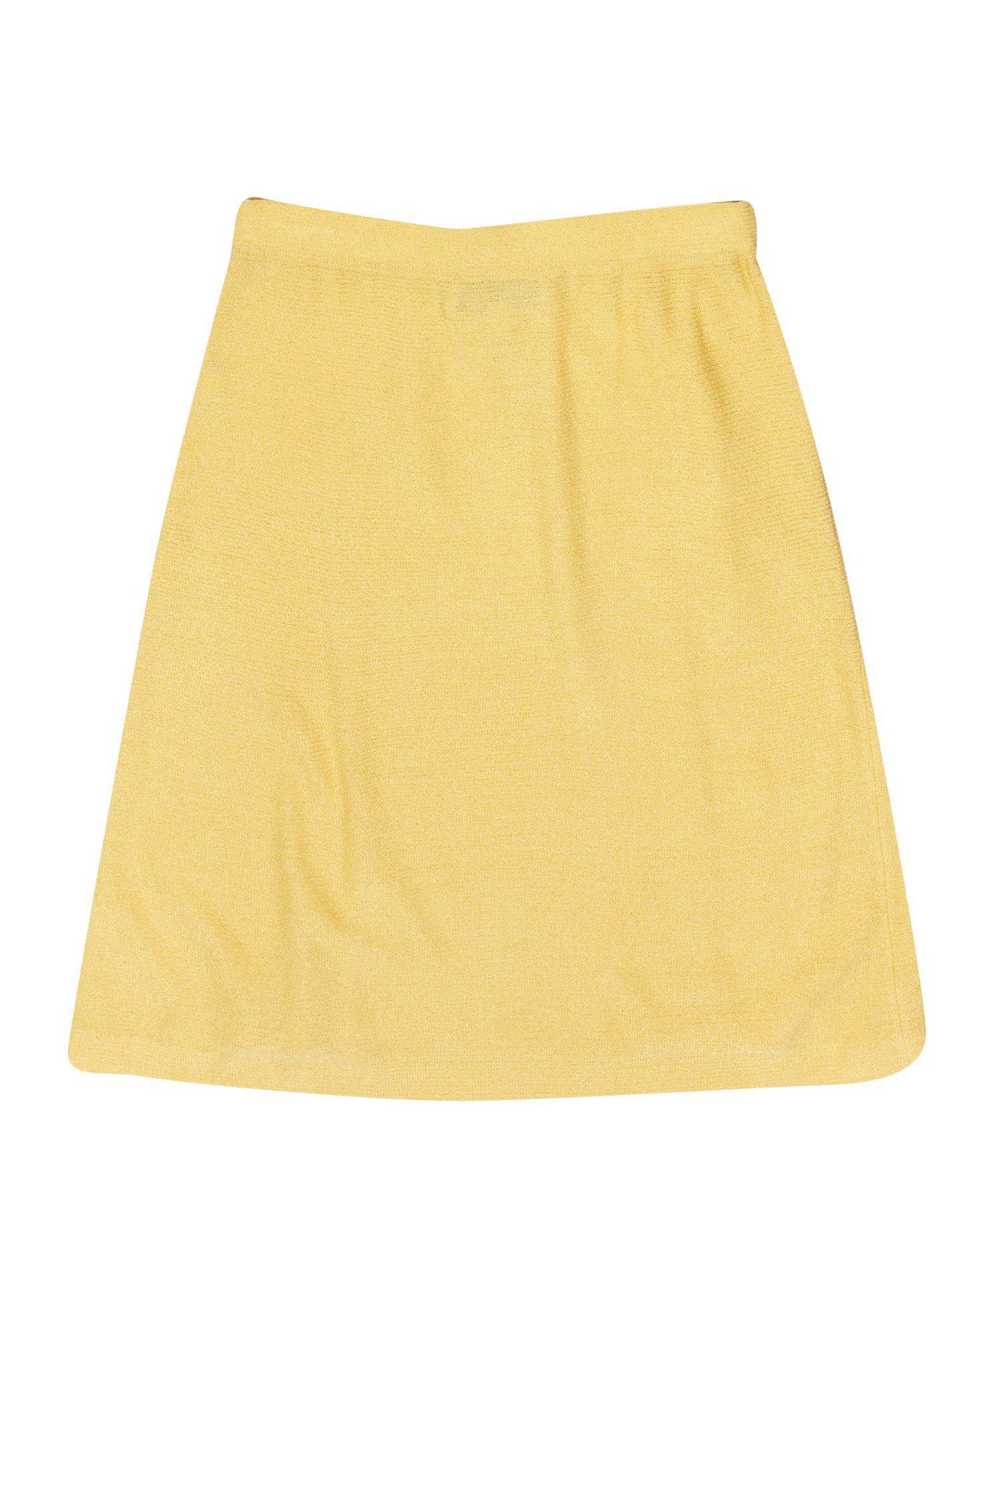 St. John - Light Yellow Knit Skirt Sz 4 - image 2